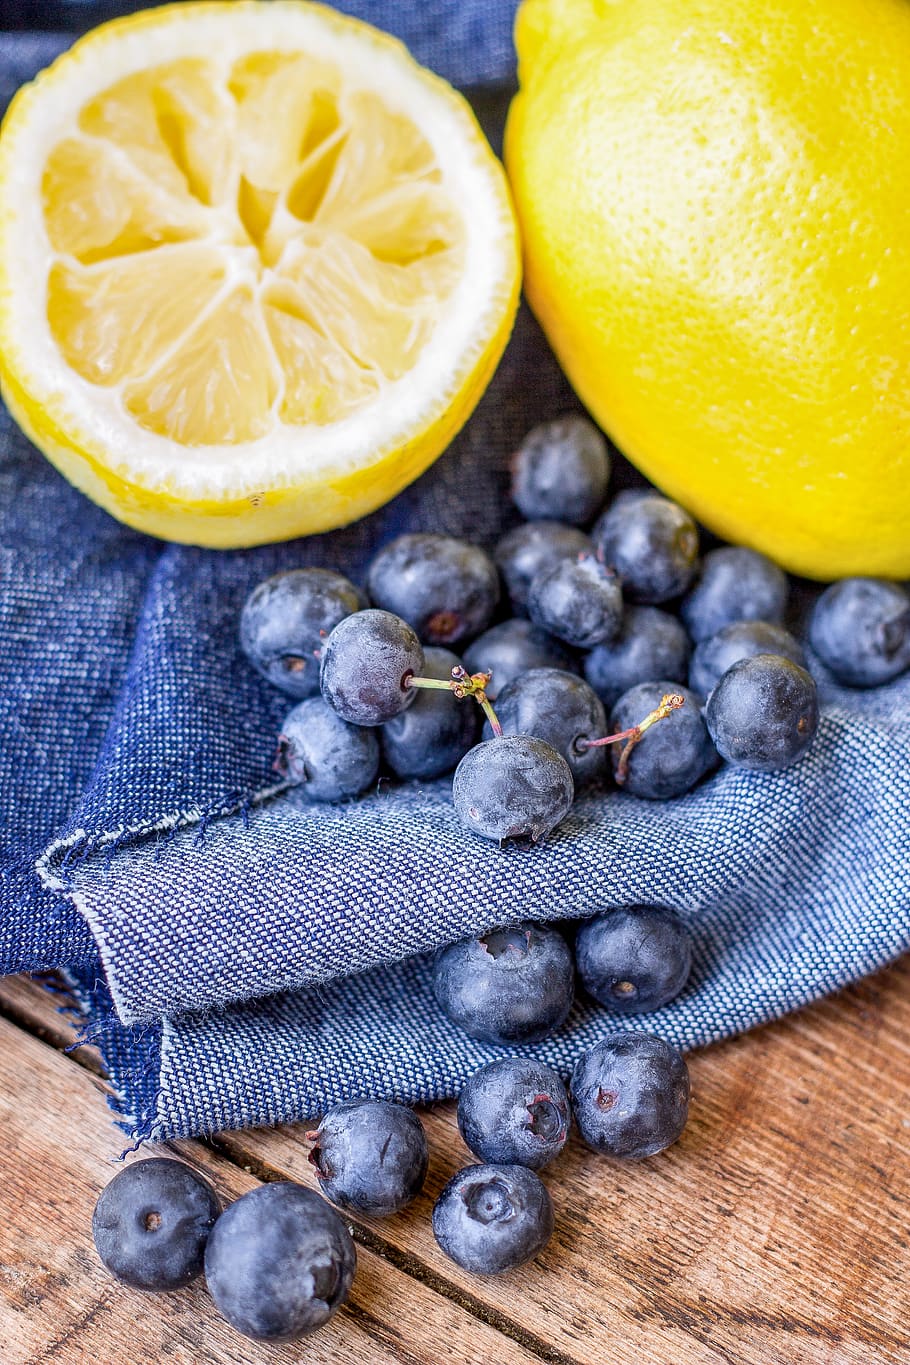 blueberry fruits near yellow lemon closeup photography, food